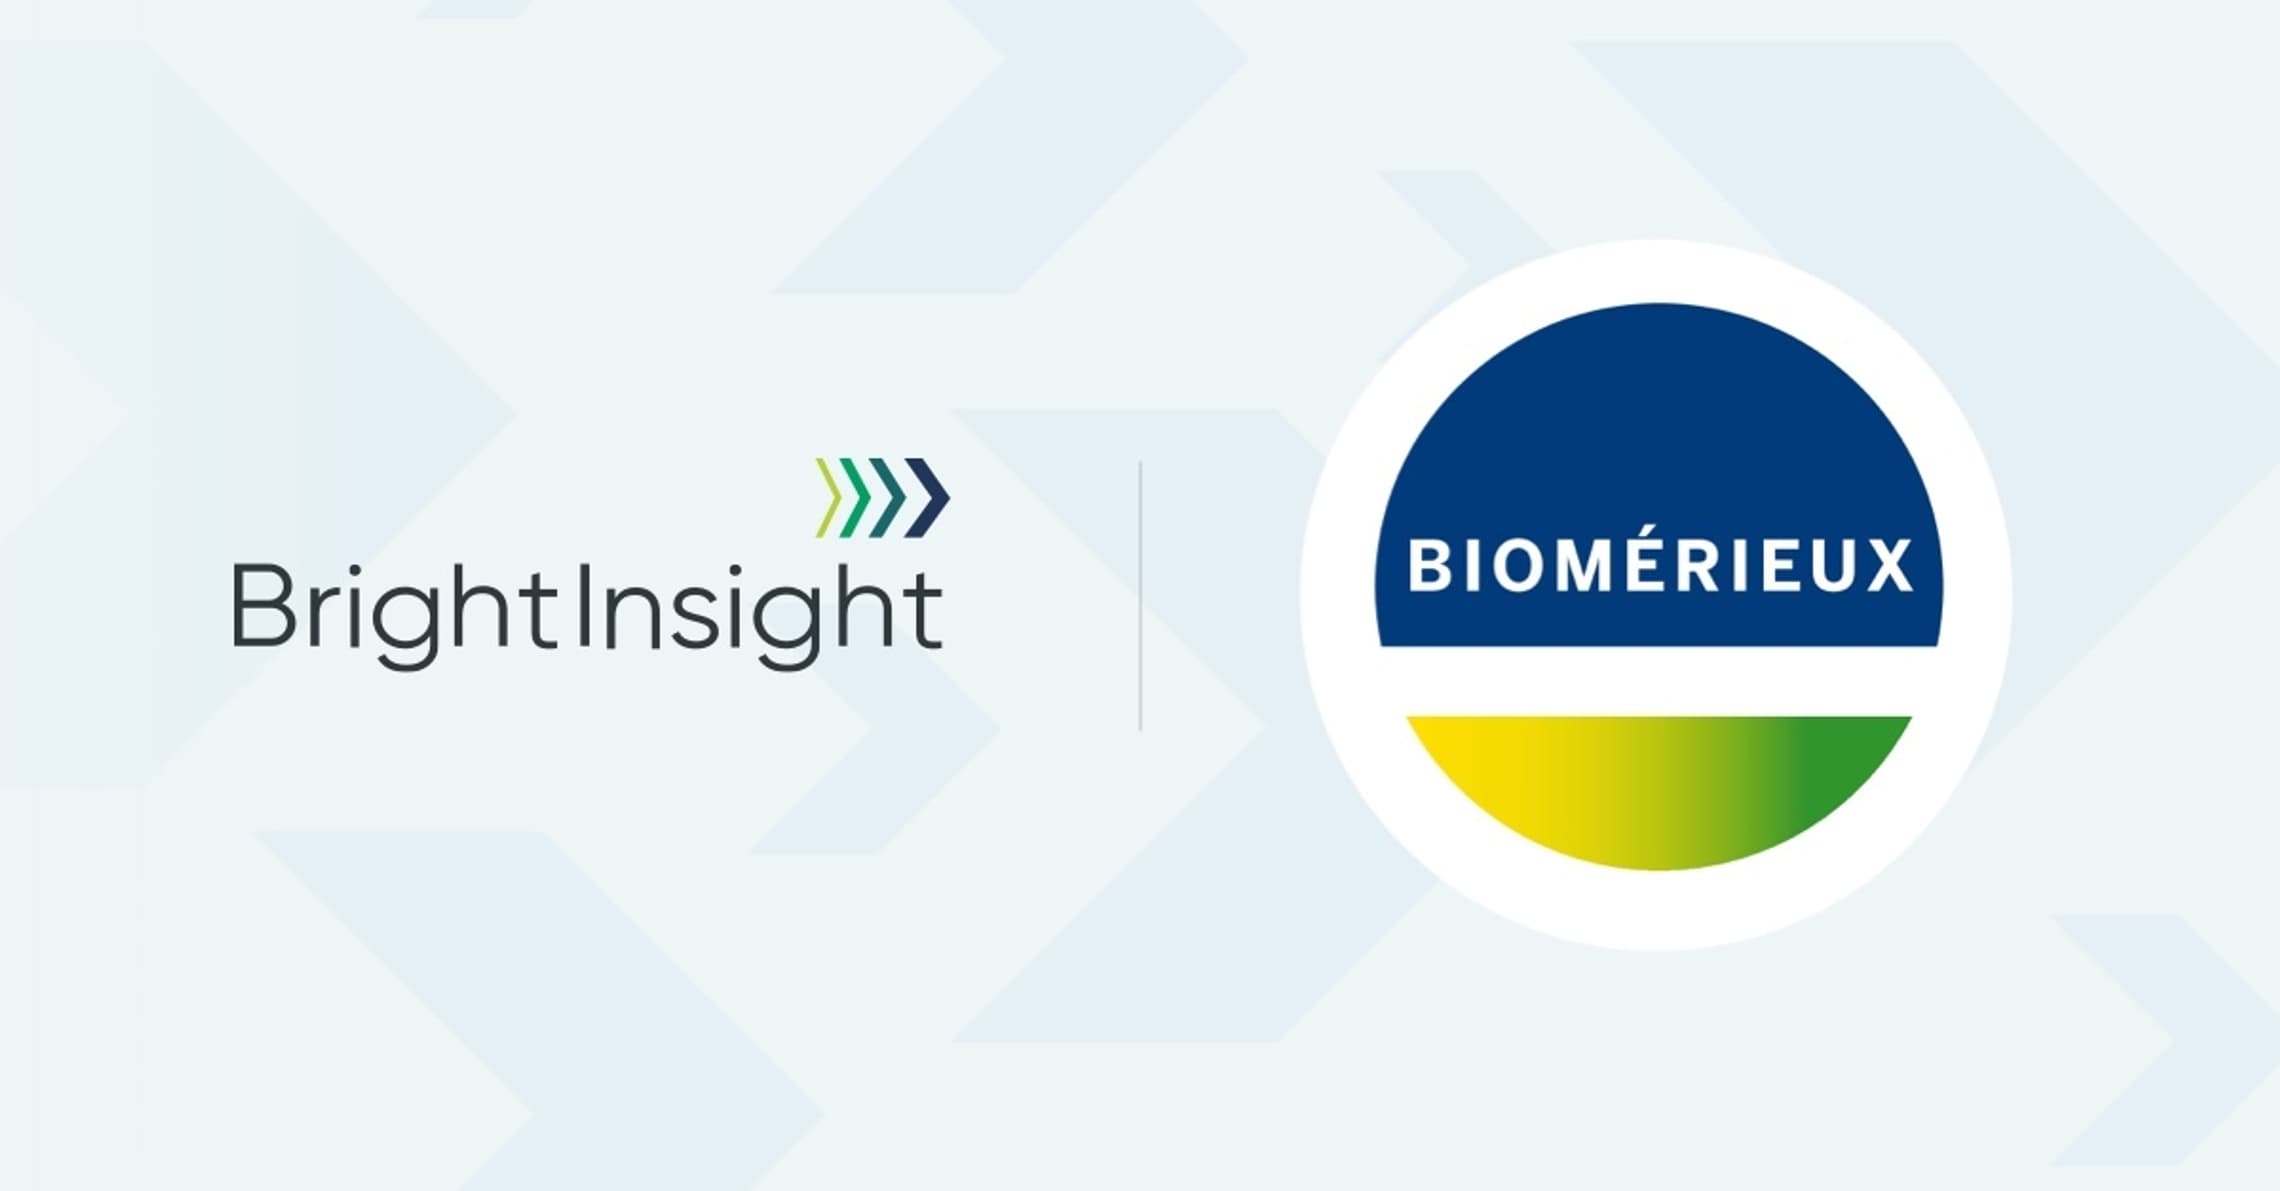 Brightinsight biomerieux logos 2